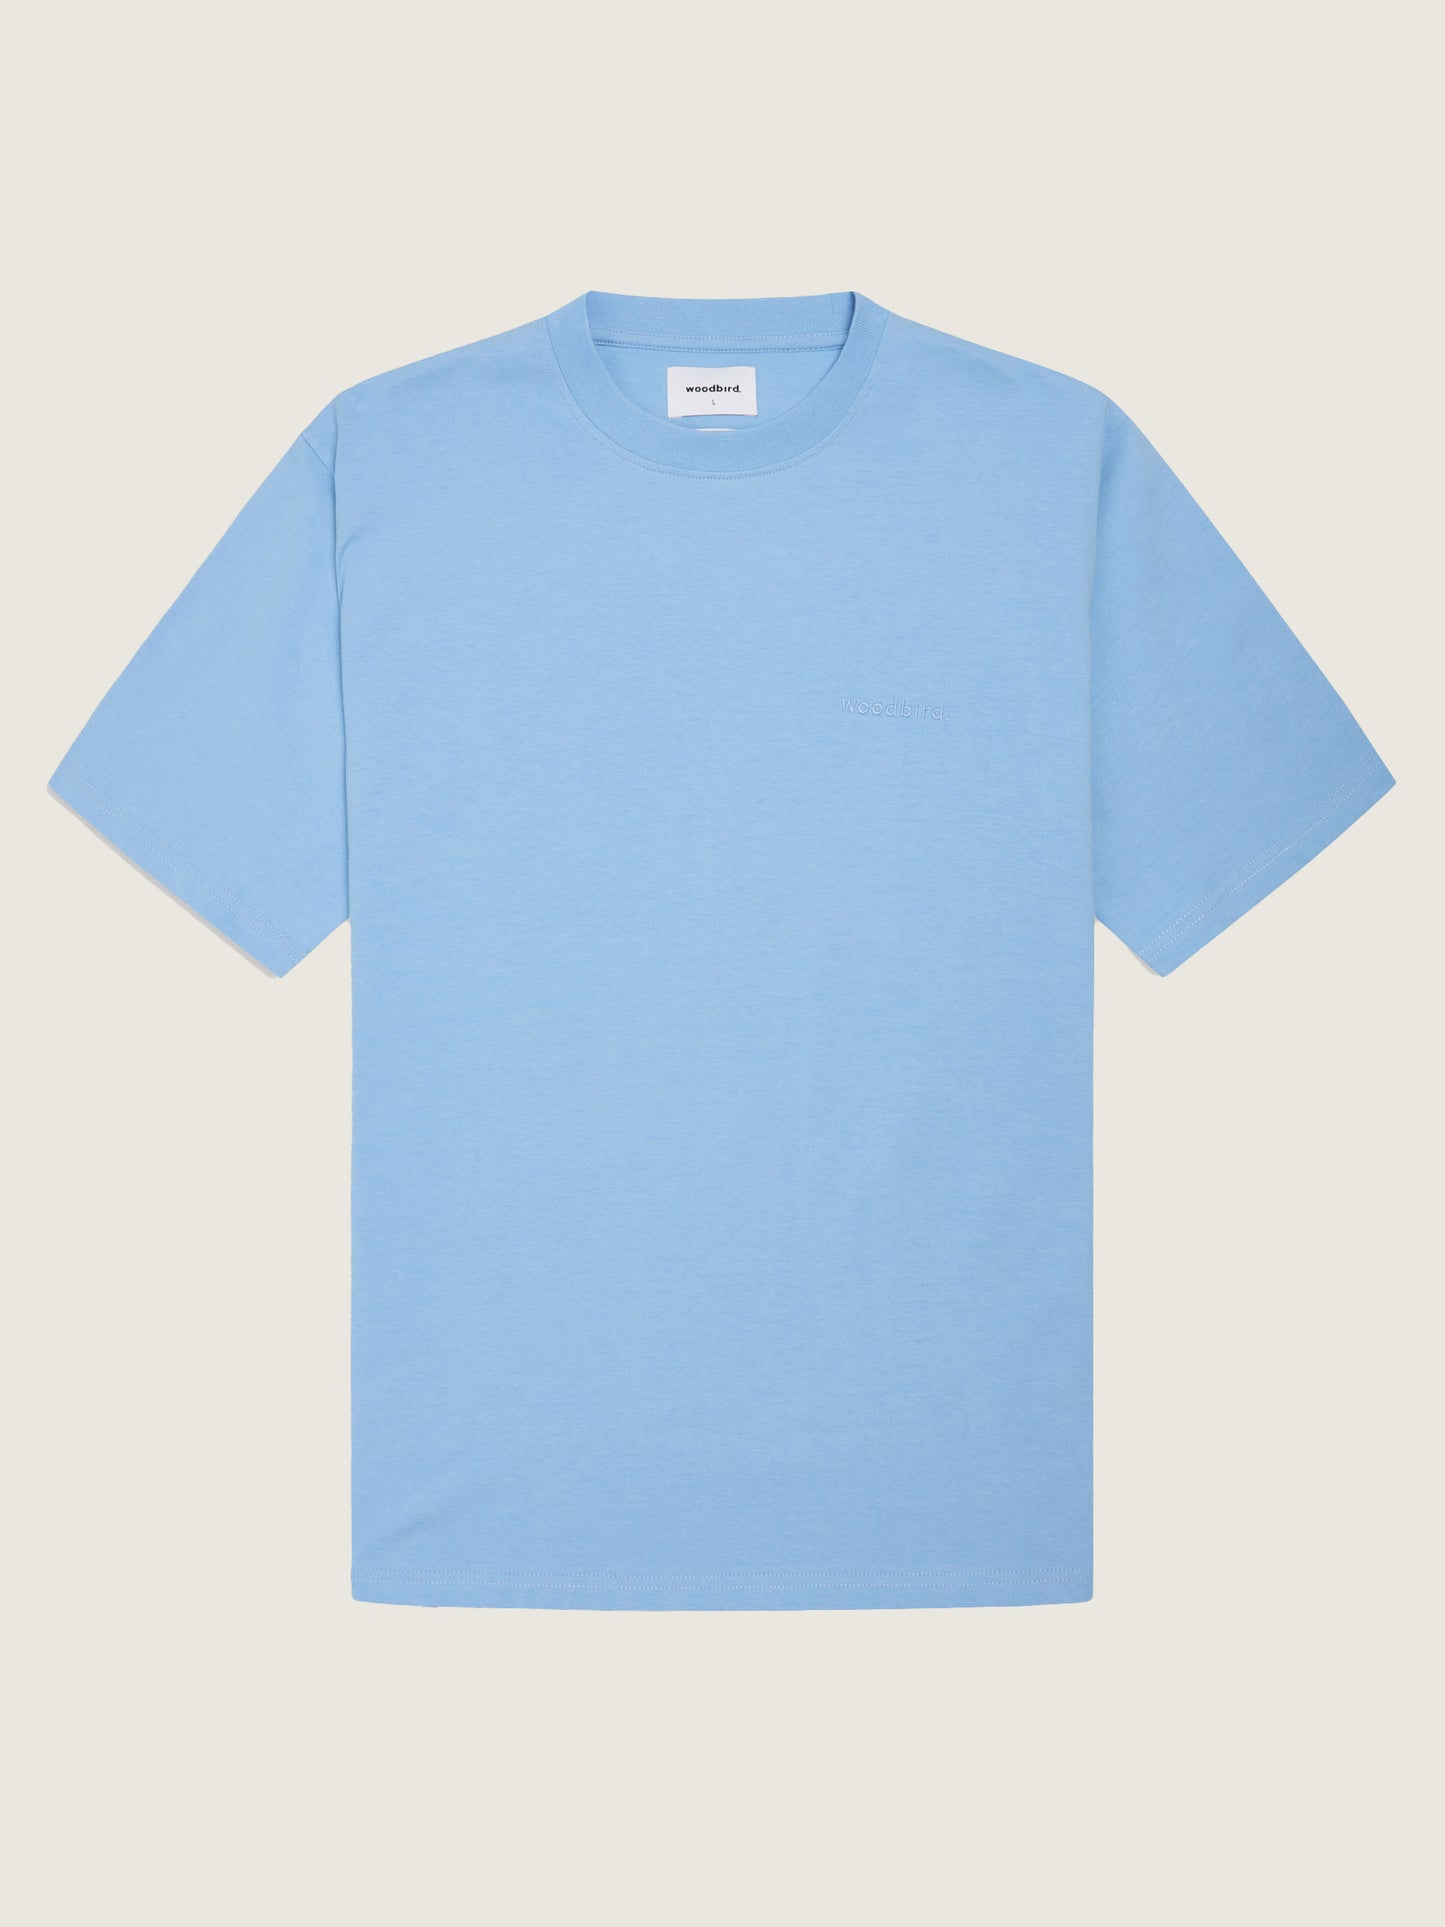 plain light blue t shirt